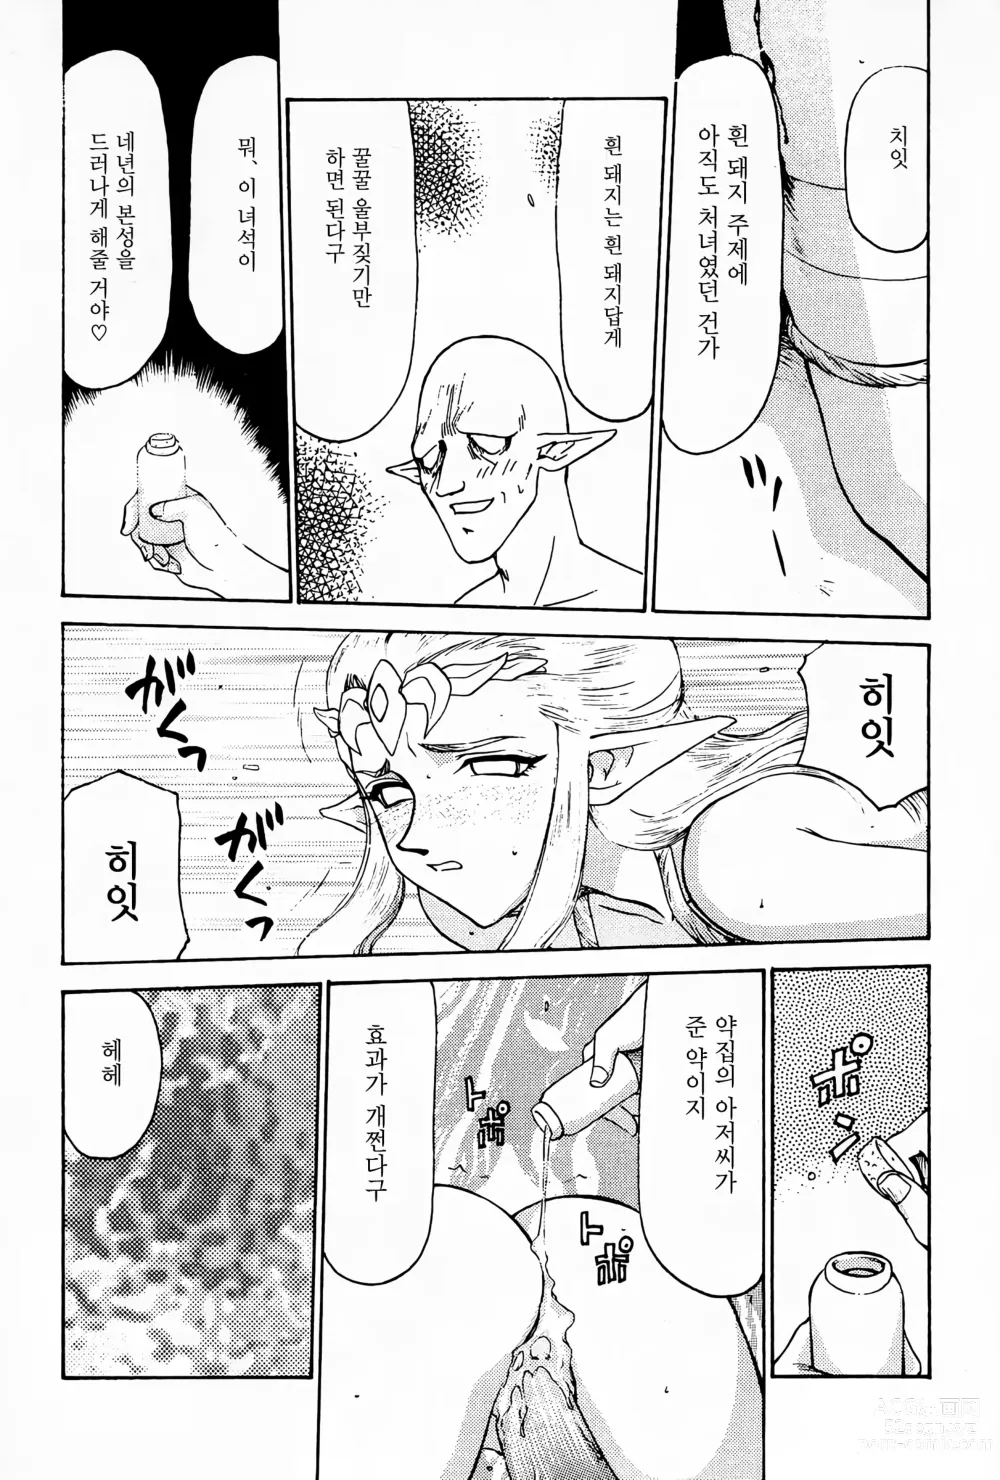 Page 19 of doujinshi NISE Zelda no Densetsu Prologue